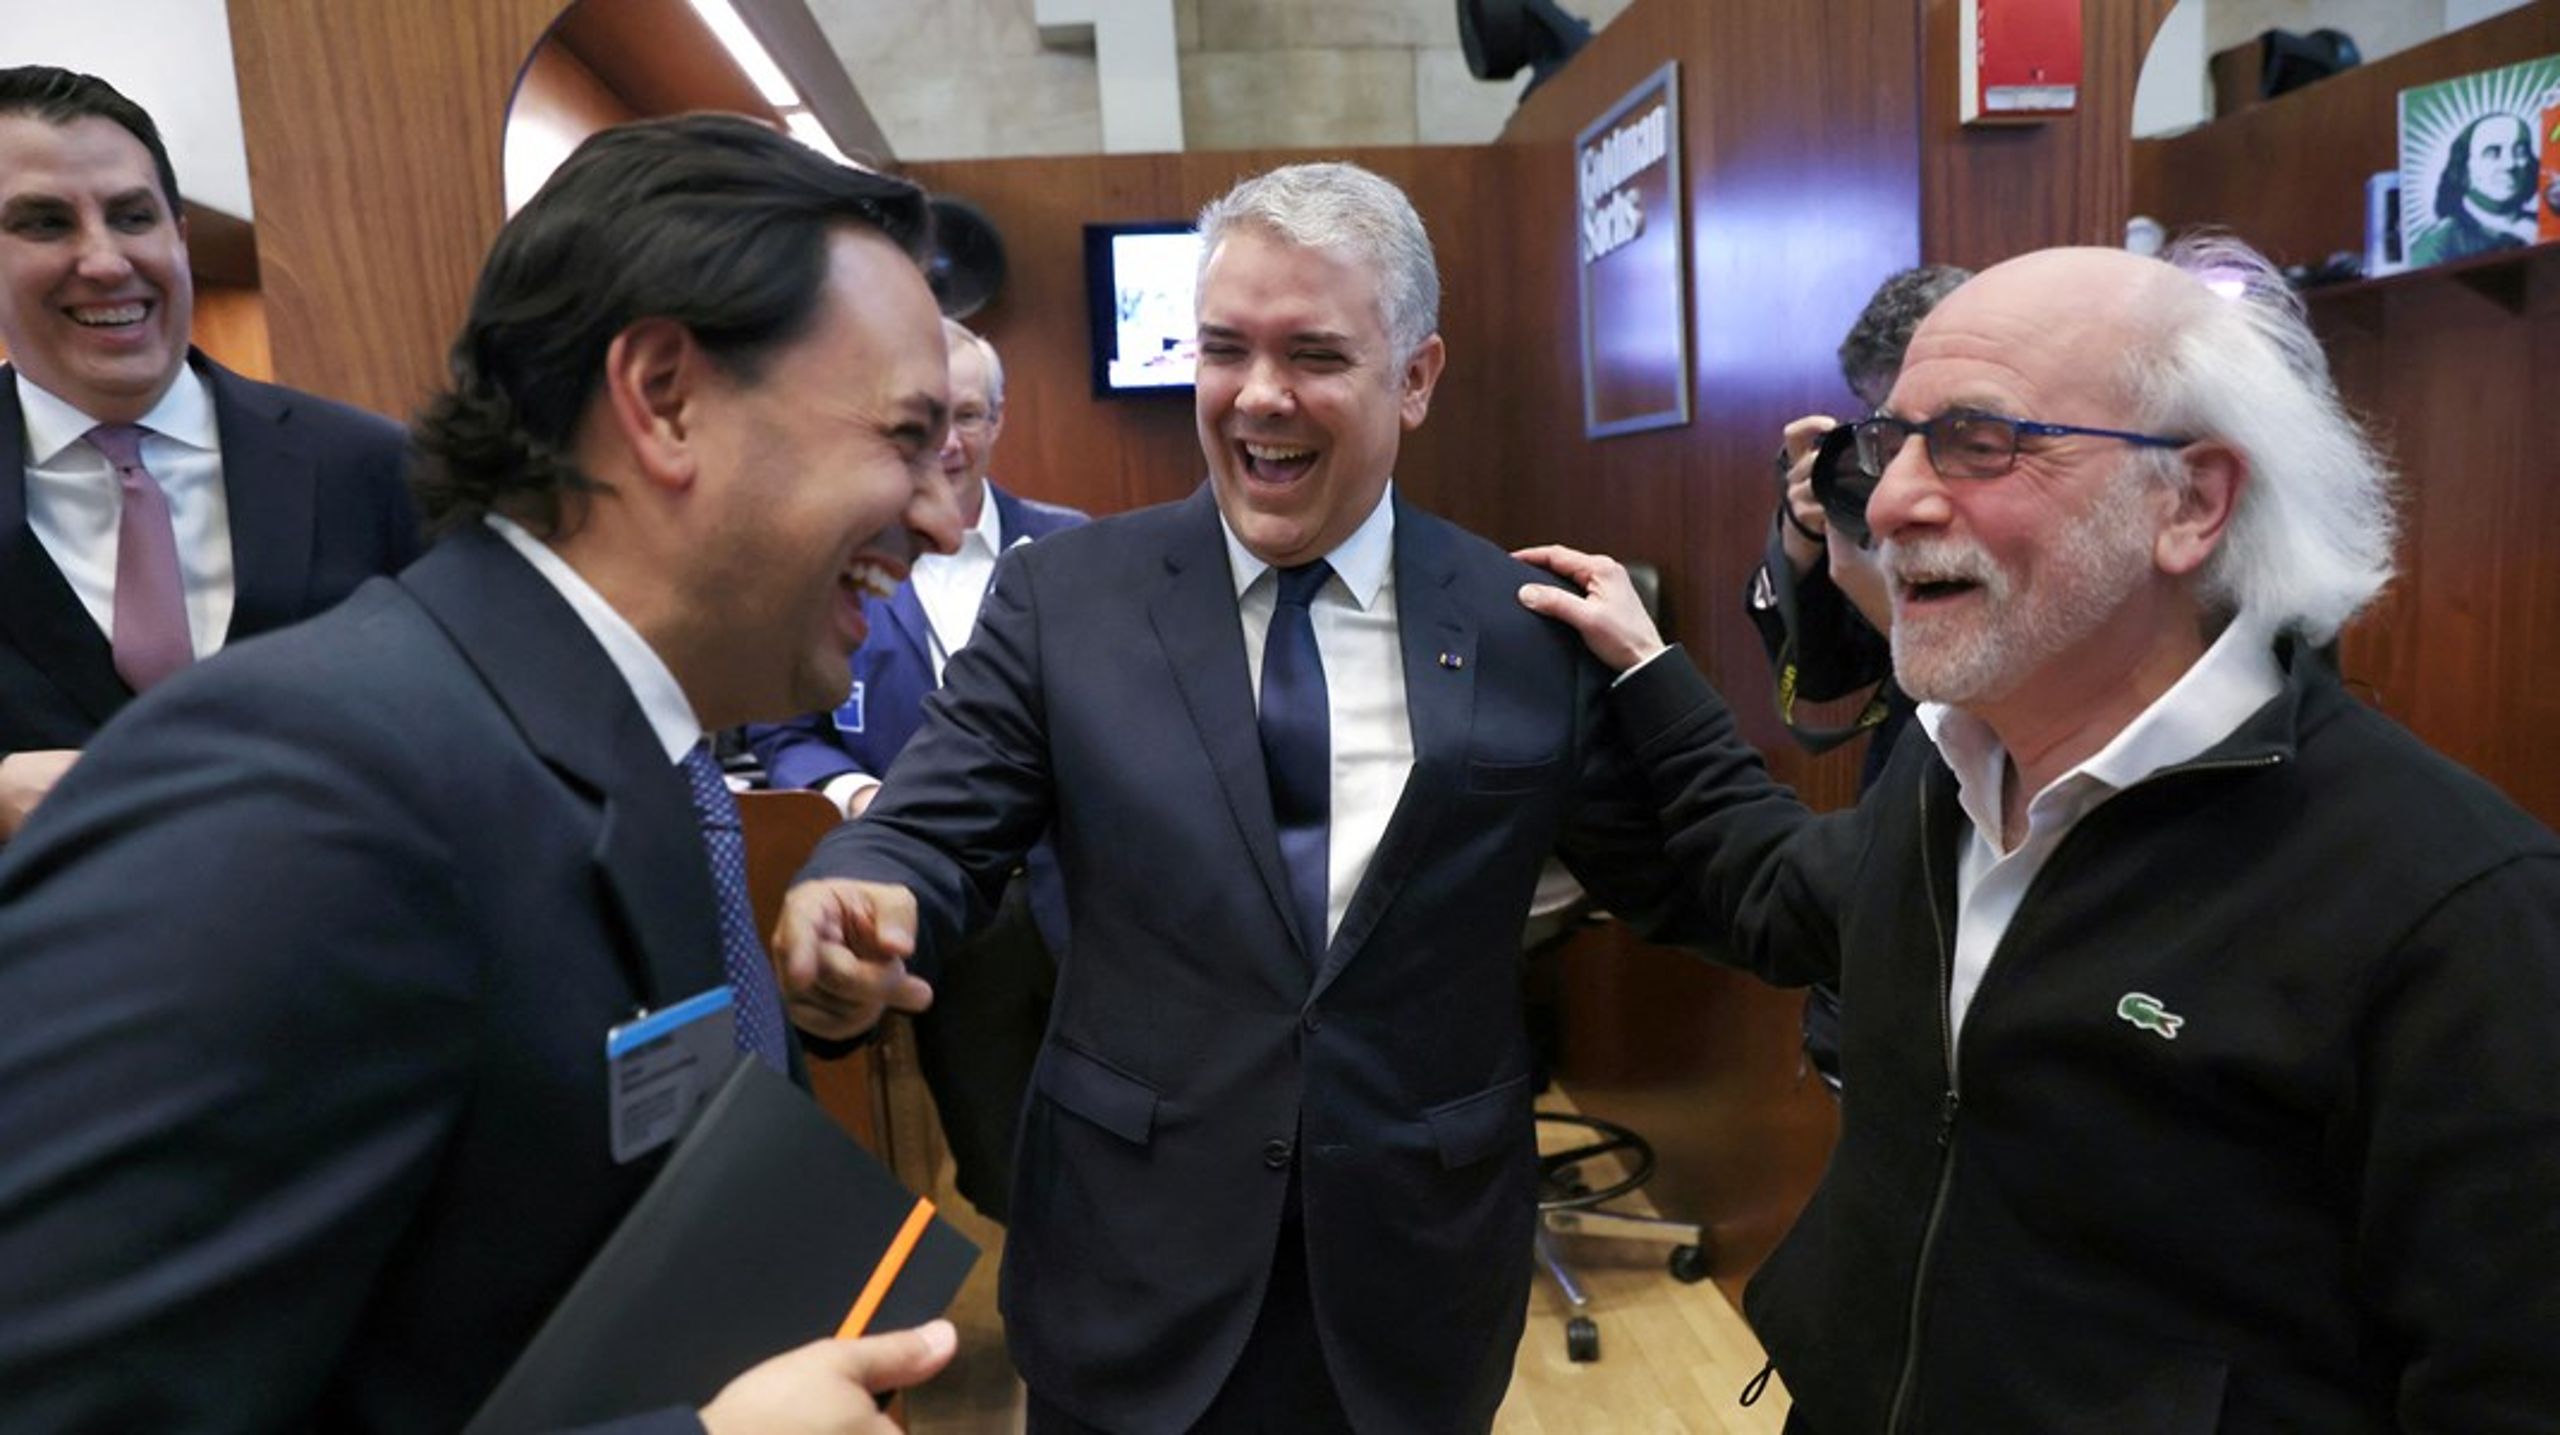 Præsident Iván Duque (midten)&nbsp;fik lov at ringe med klokken på Børsen i New York. Til højre er den ikoniske aktiehandler Peter Tuchmann, også kendt som 'Einstein&nbsp;of&nbsp;Wall Street'.&nbsp;